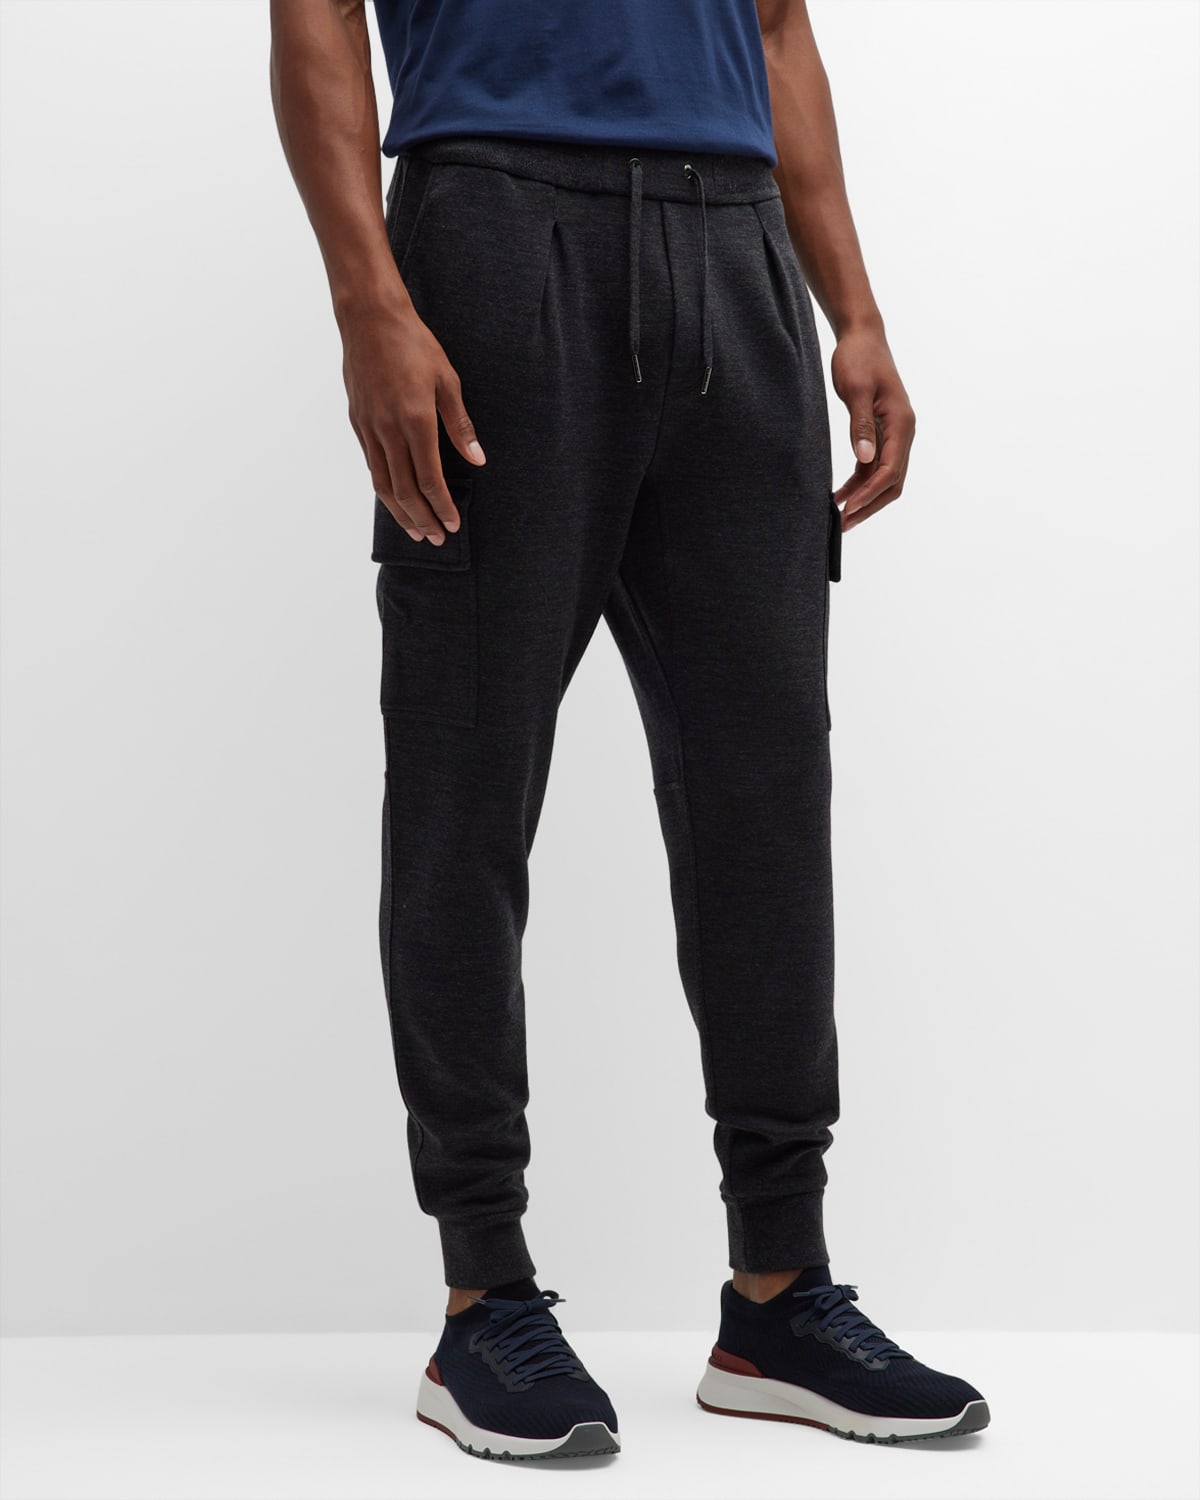 Wool Plaid Pants | Neiman Marcus